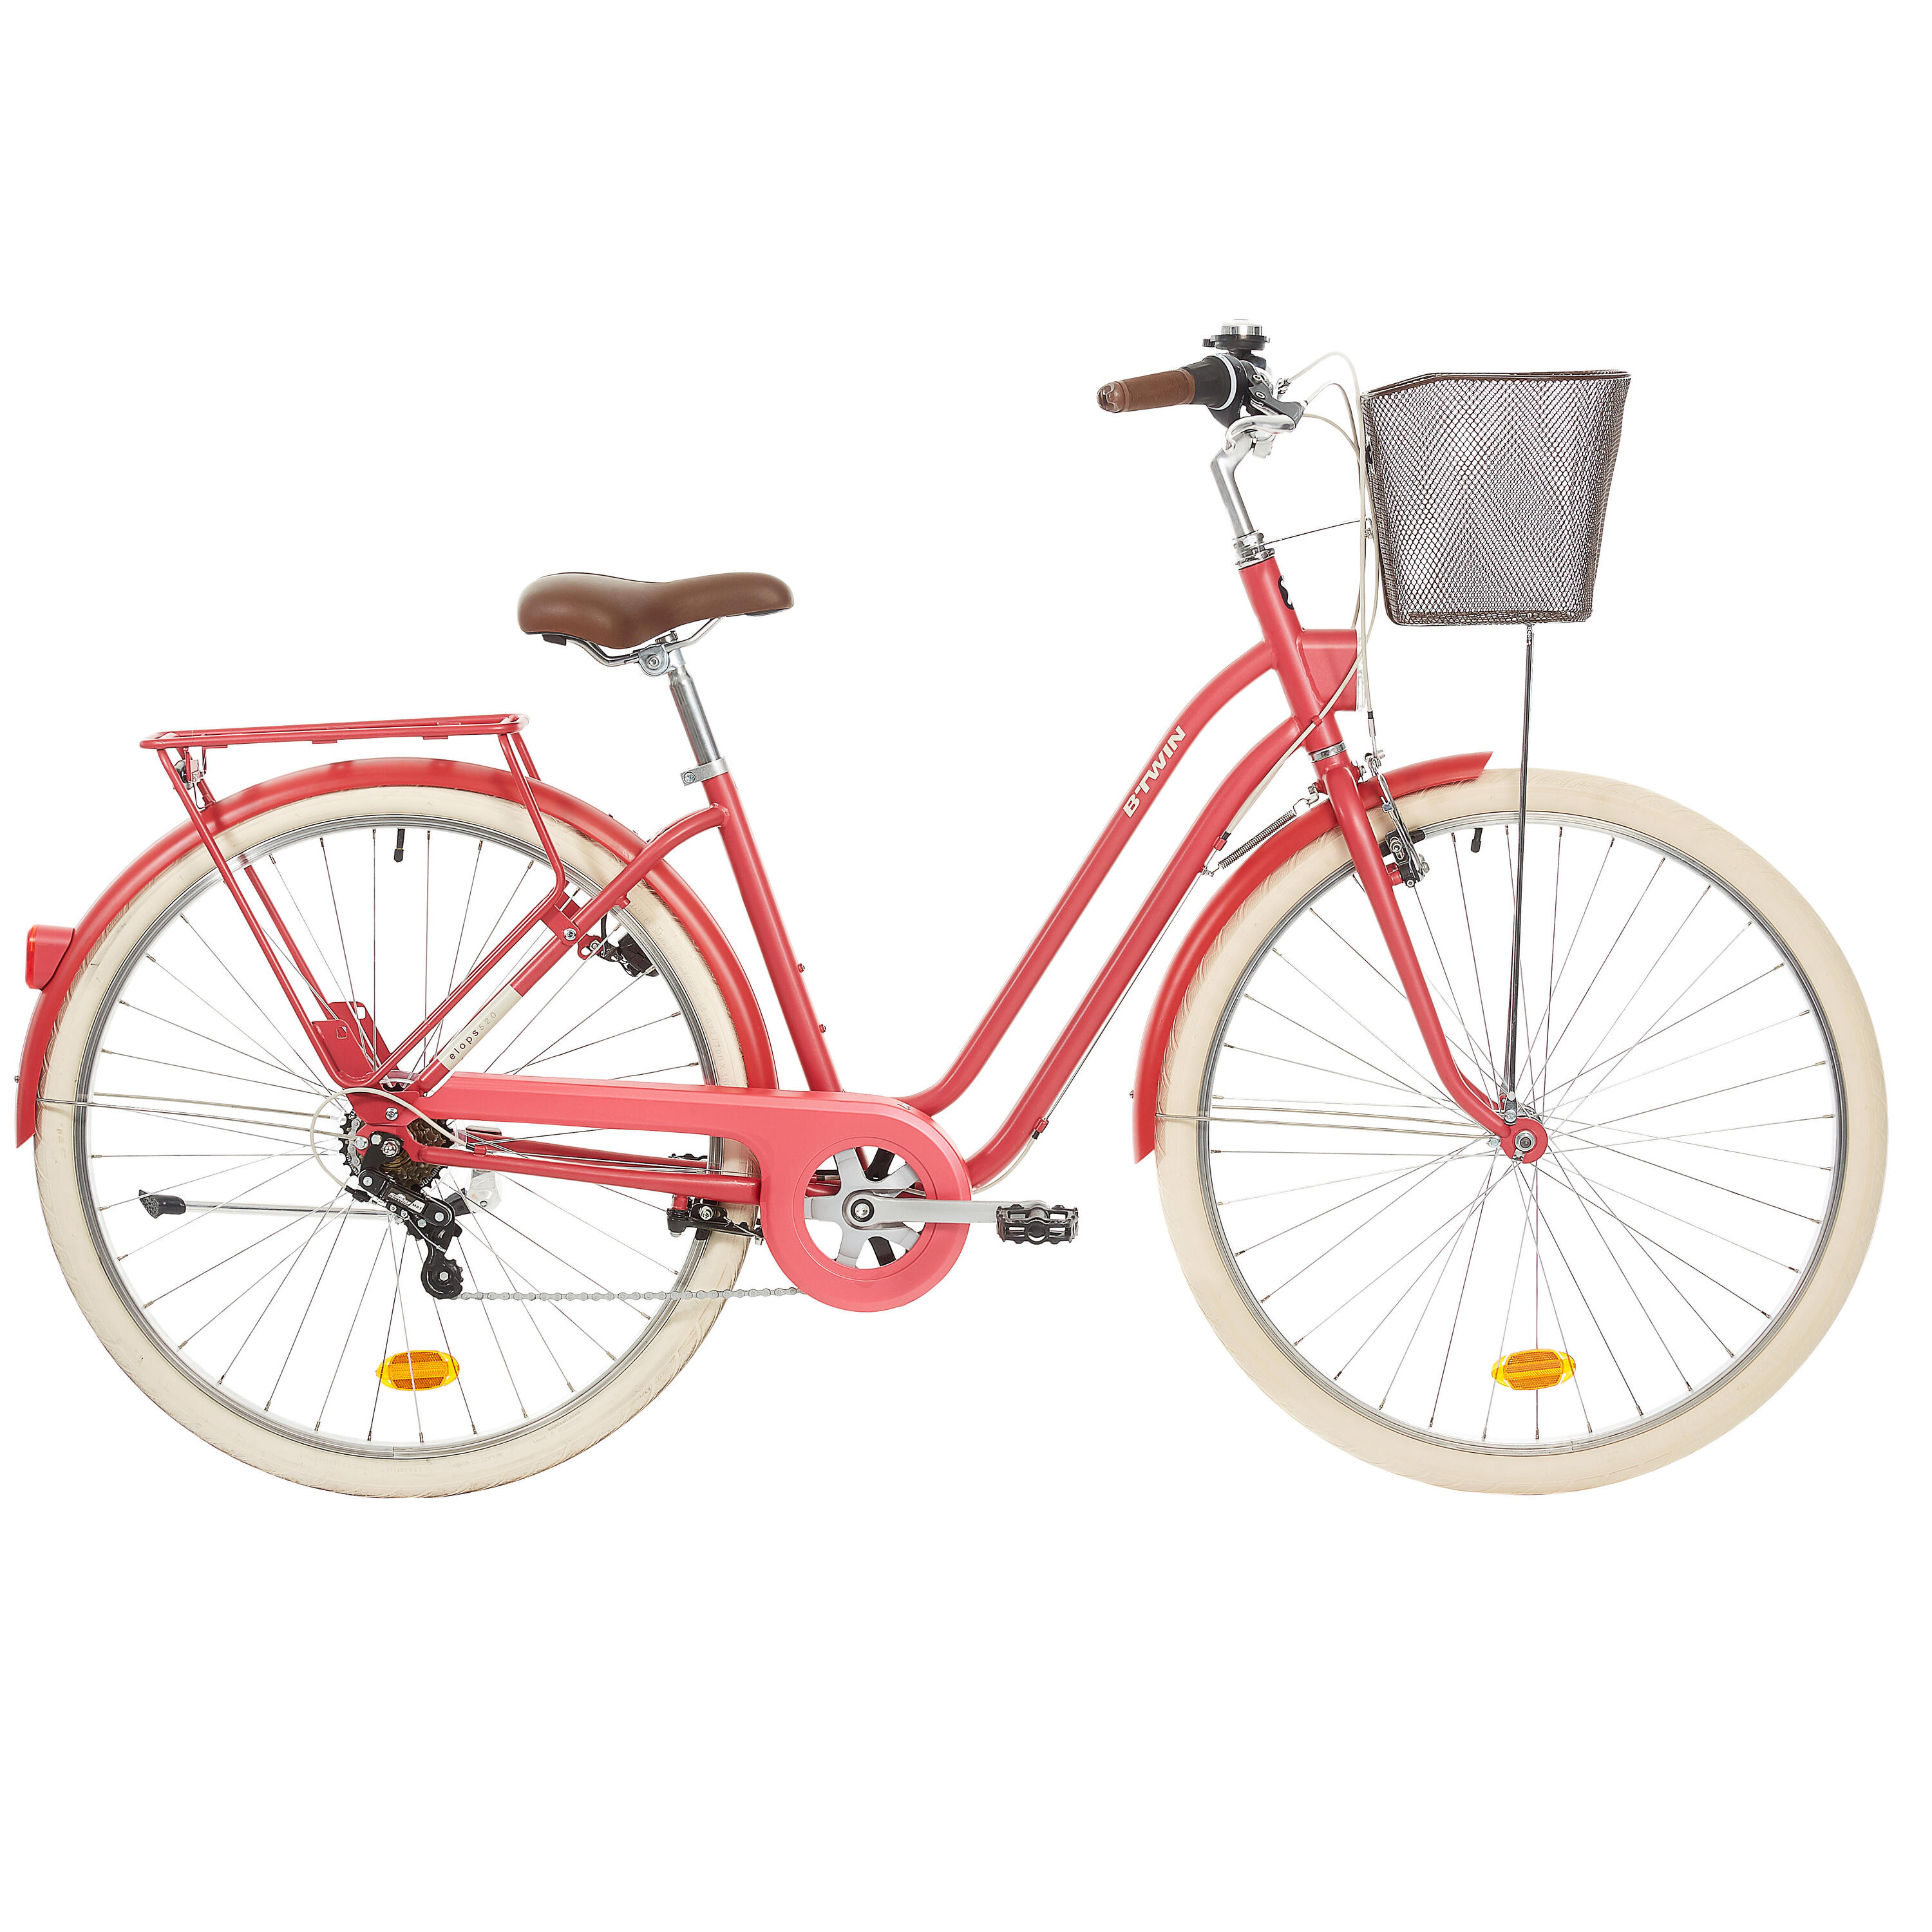 ELOPS Elops 520 Low Frame City Bike - Pink